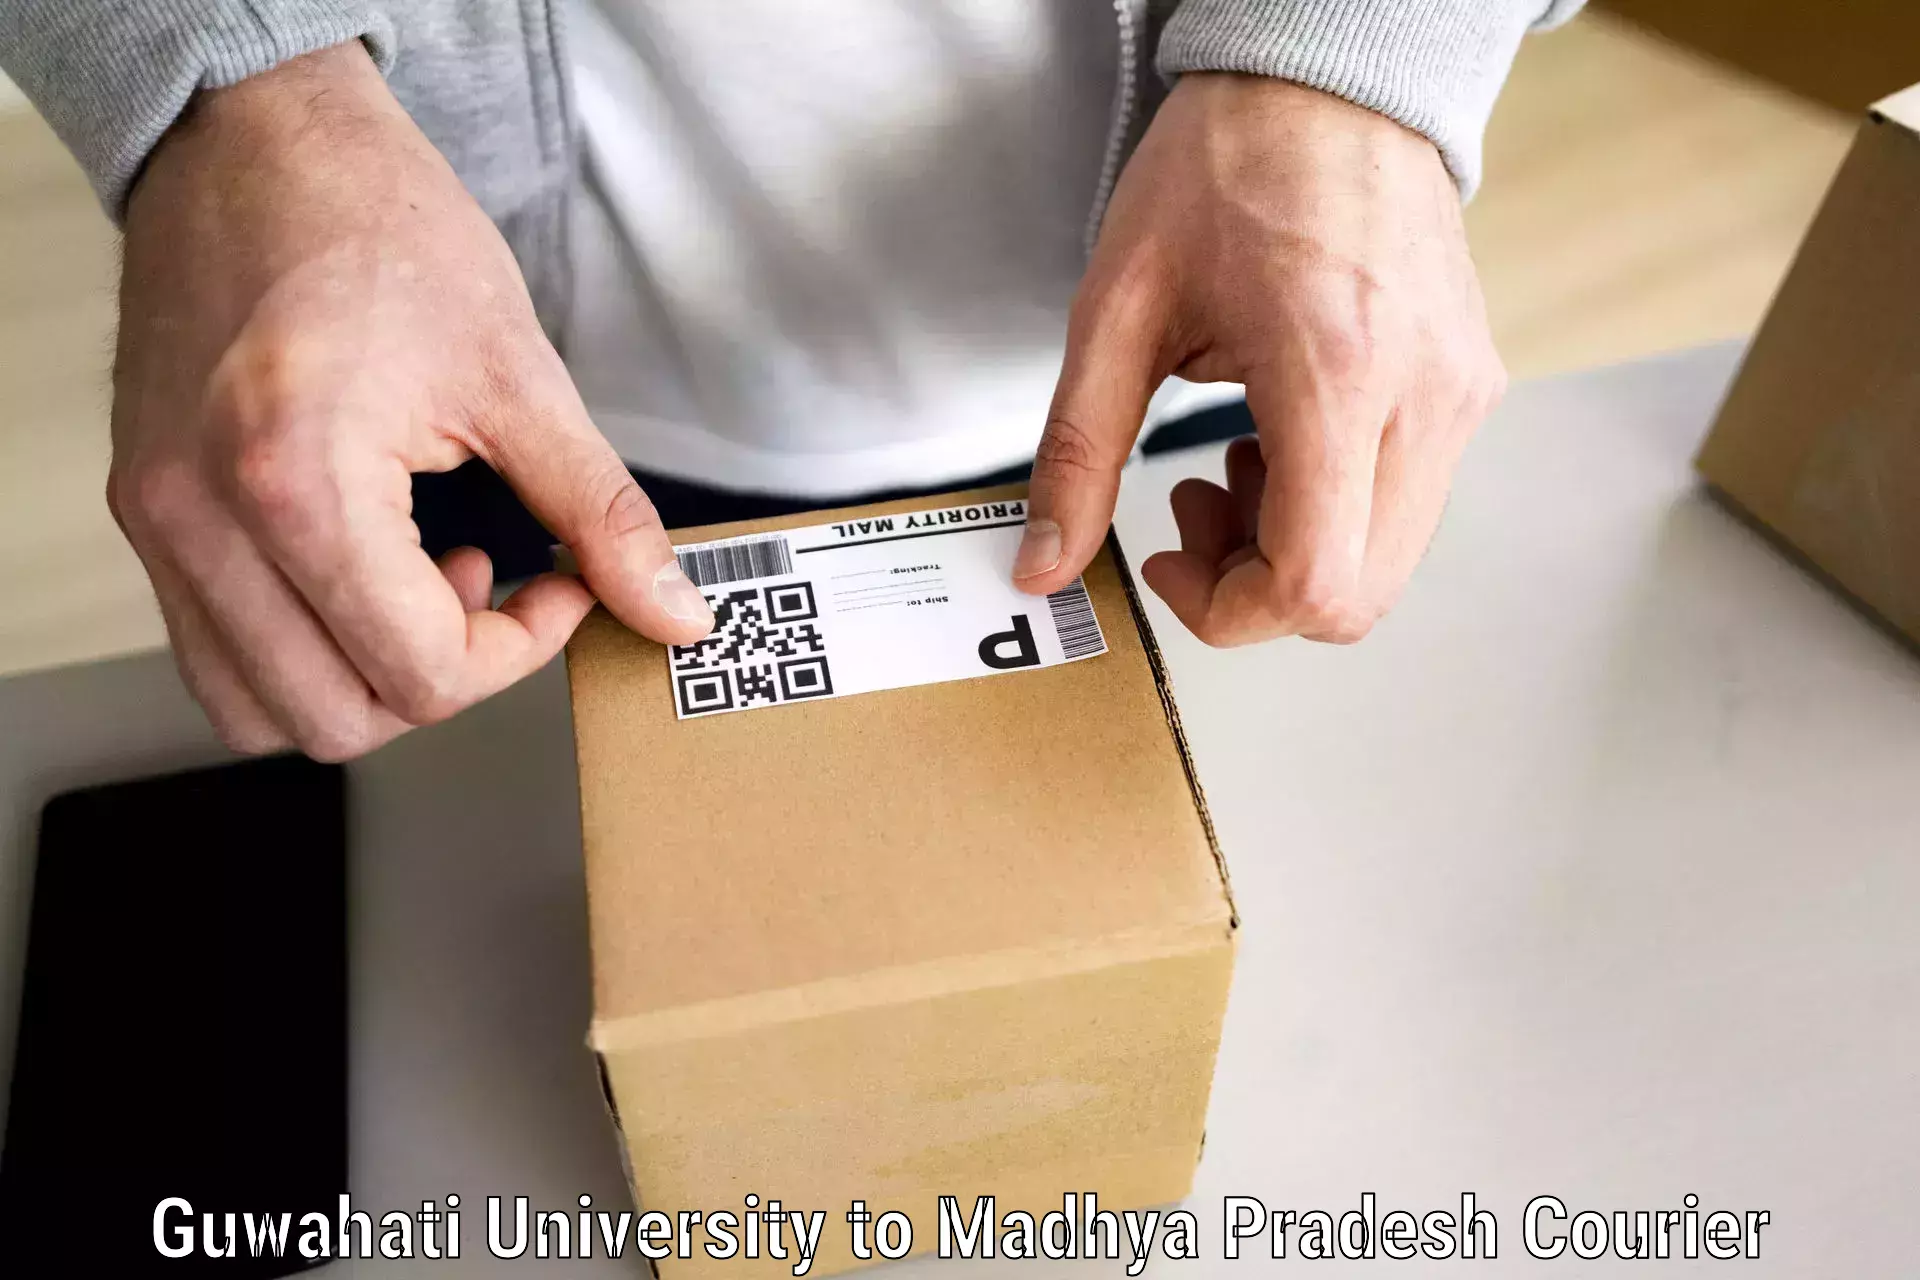 Tailored moving packages Guwahati University to Mundi